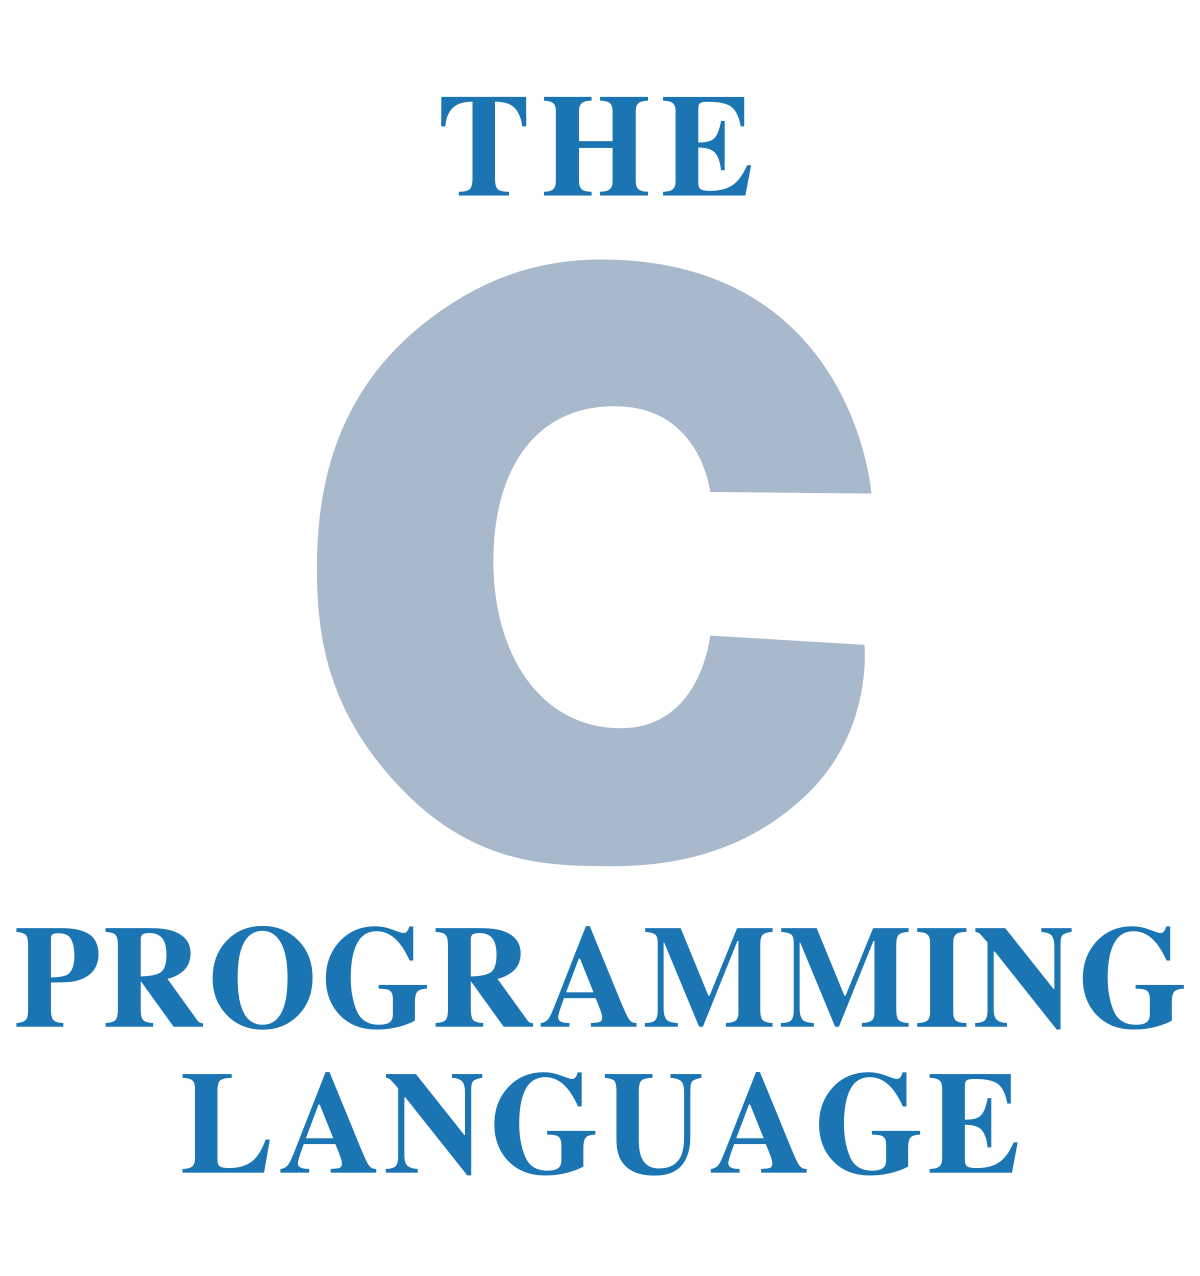 C language programming [EL-5401]